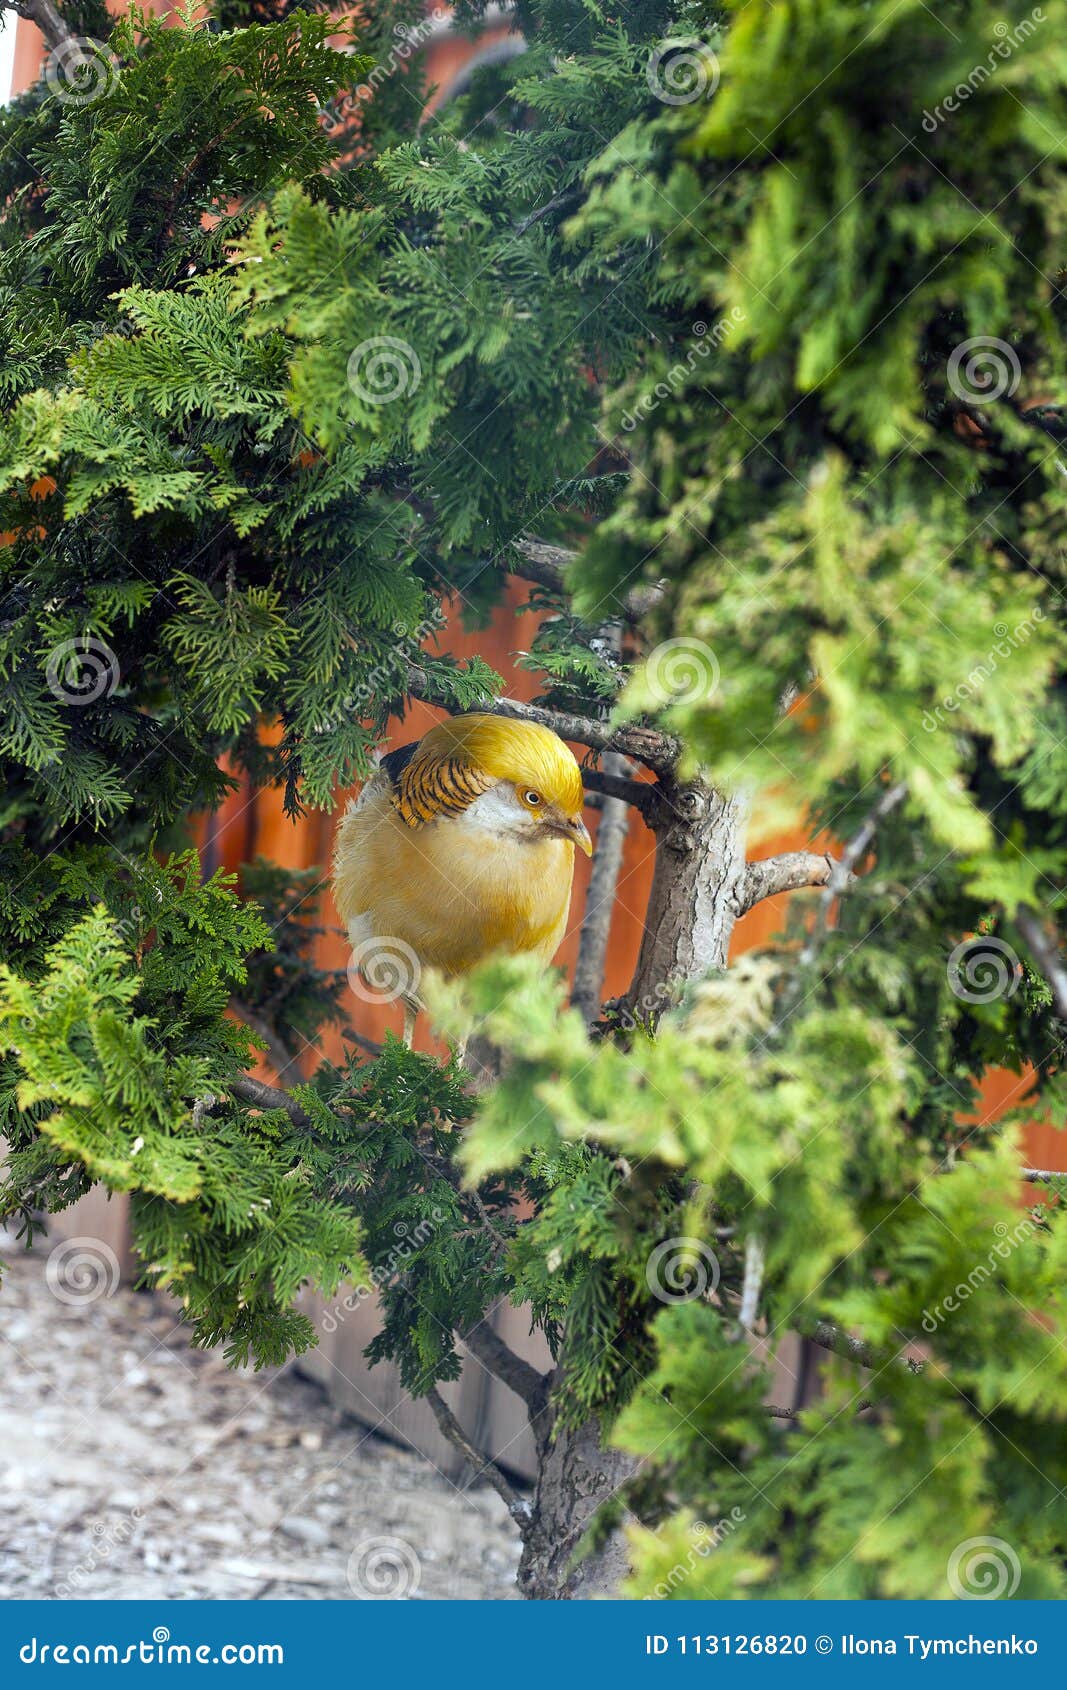 Golden Pheasant Orange Bird Stock Photo - Image of branch, golden ...